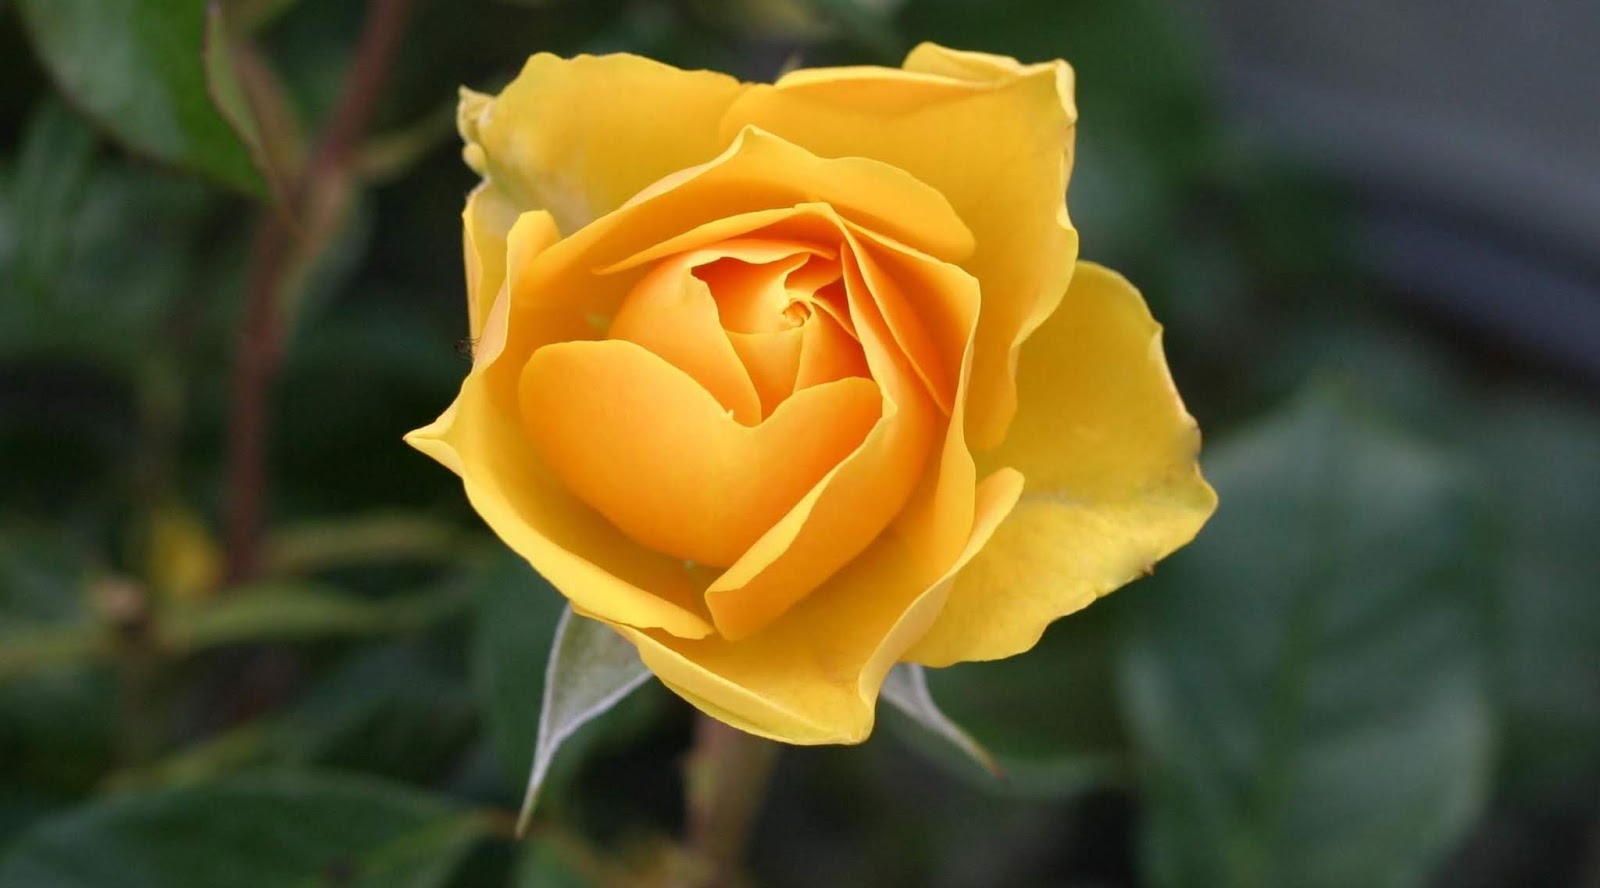  Gambar  Bunga Mawar  Dengan Berbagai Warna Dan  Maknanya 